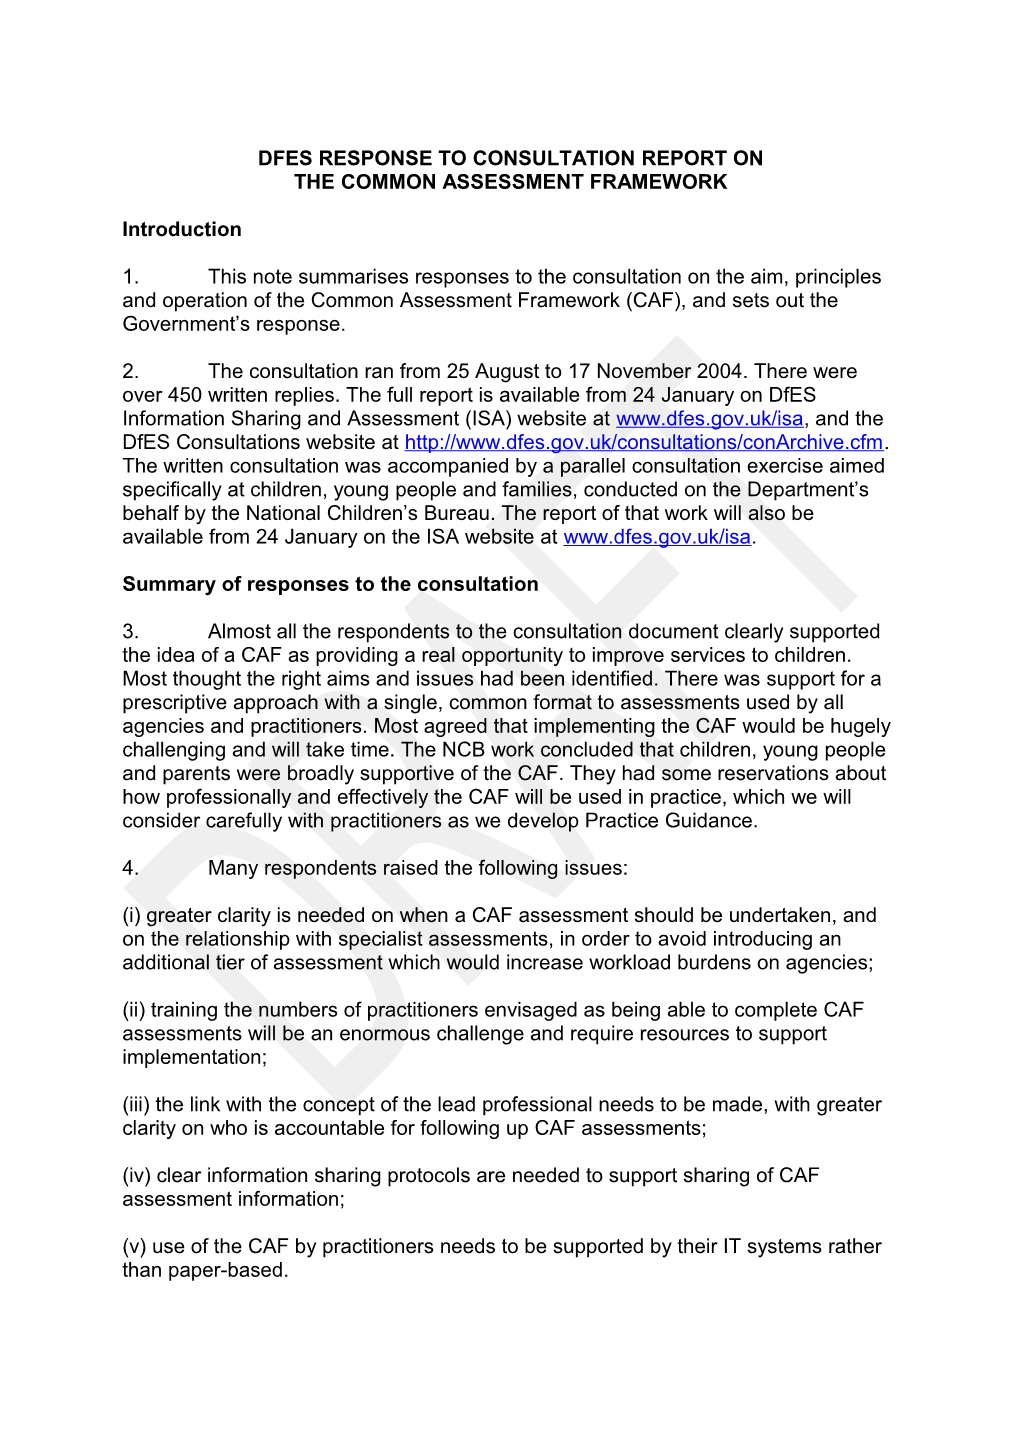 Isa Sub-Programme Paper on the Common Assessment Framework